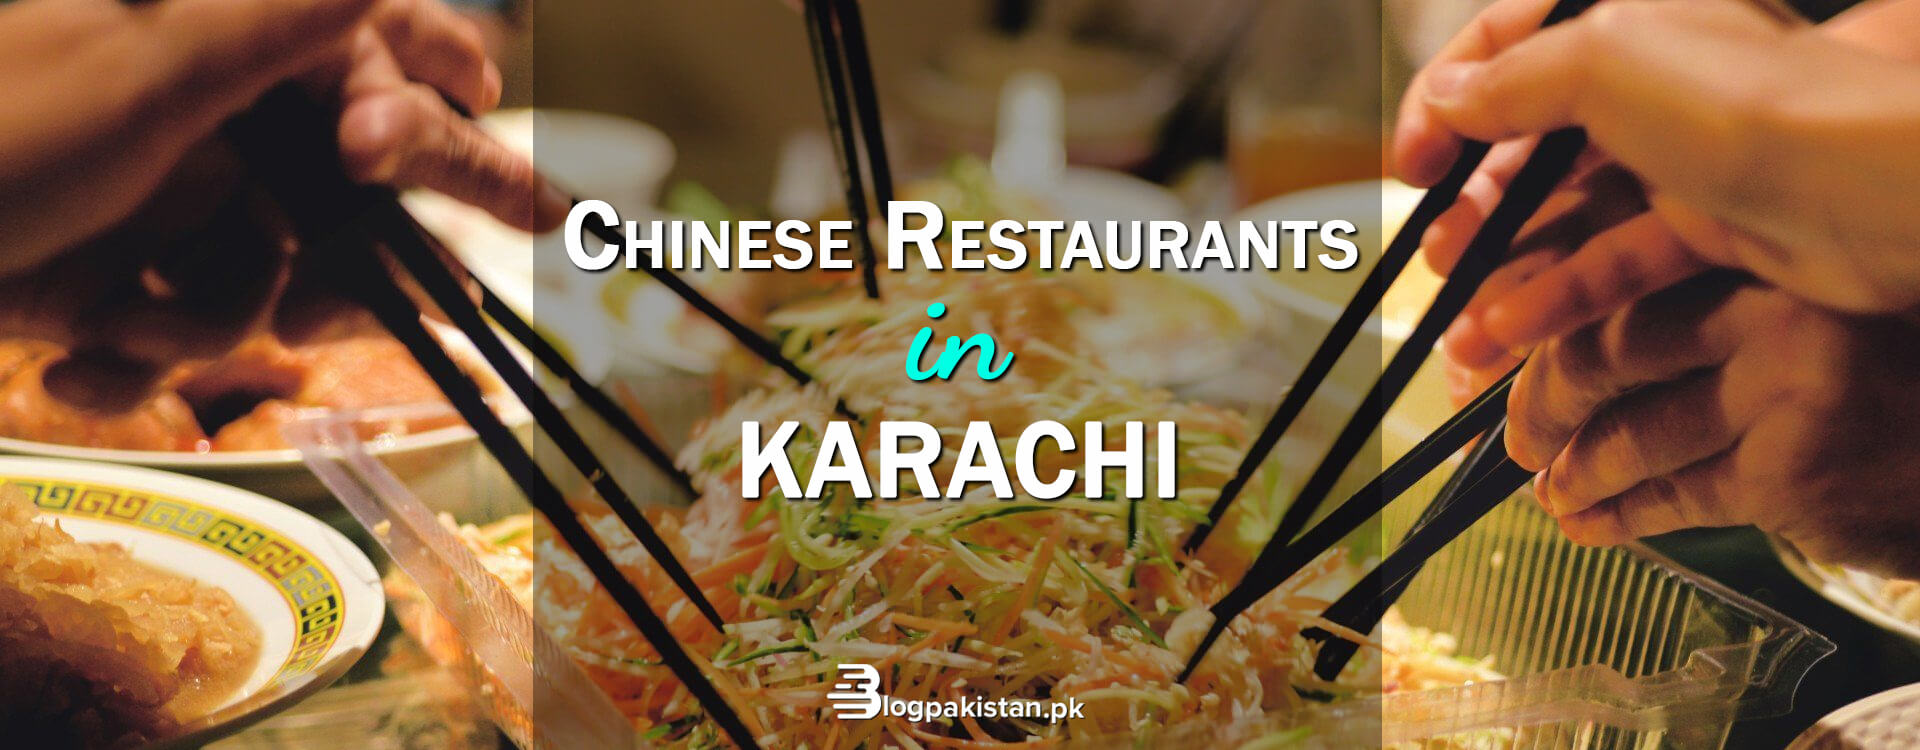 Chinese Restaurants in Karachi